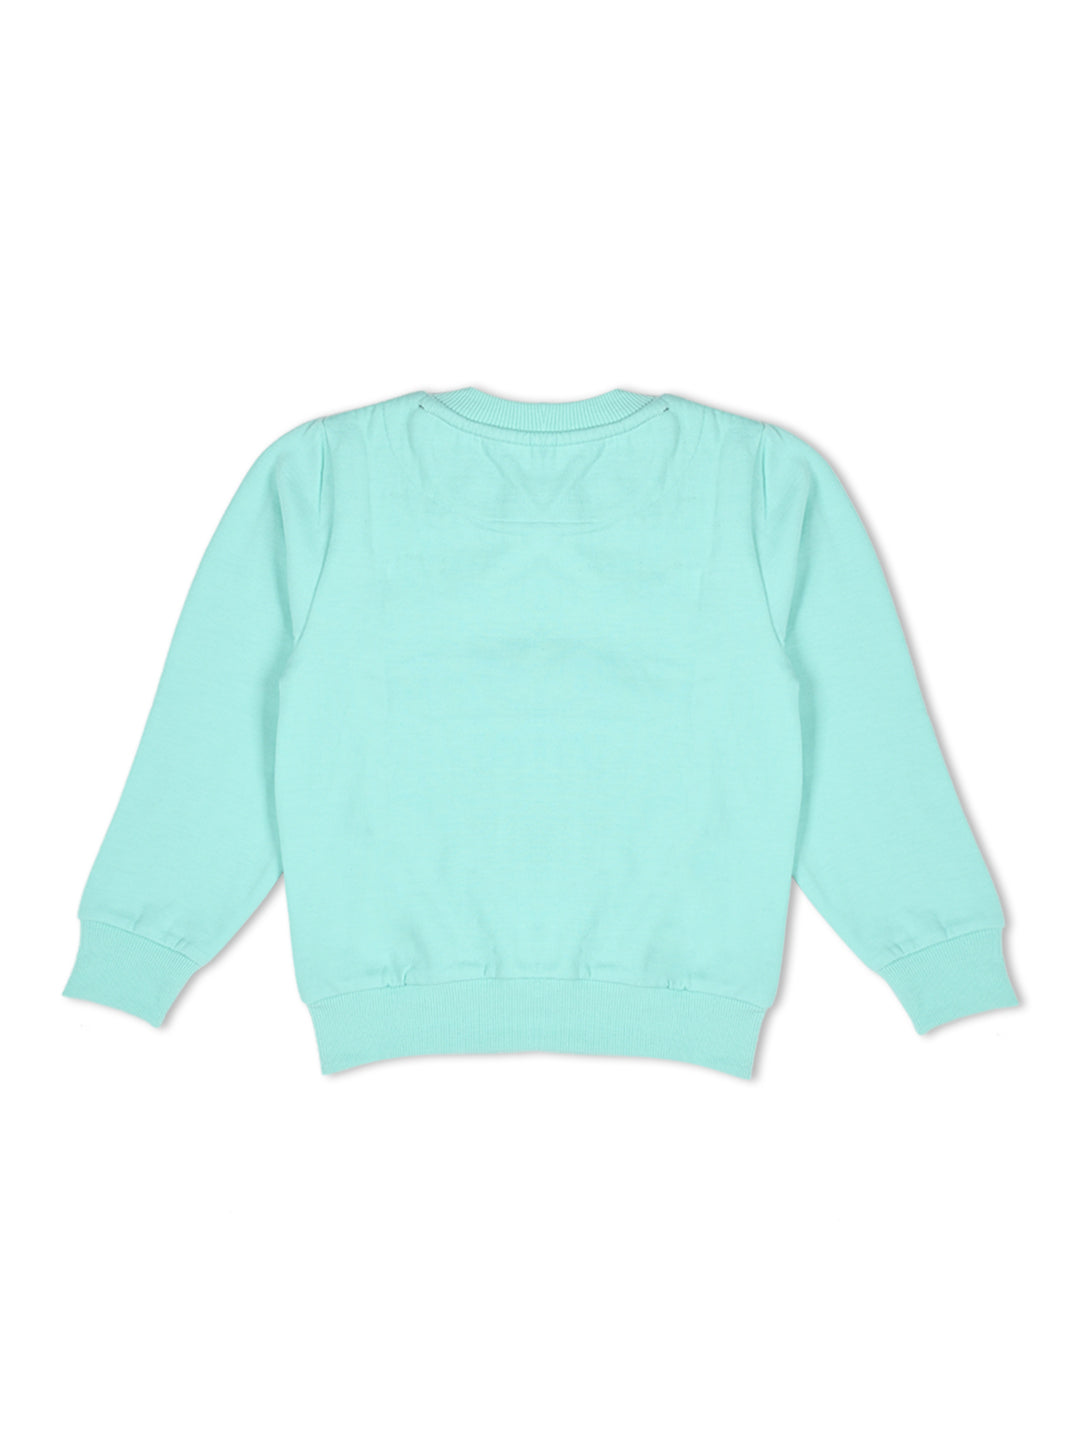 Green Fleece Unisex Sweatshirt for Kids